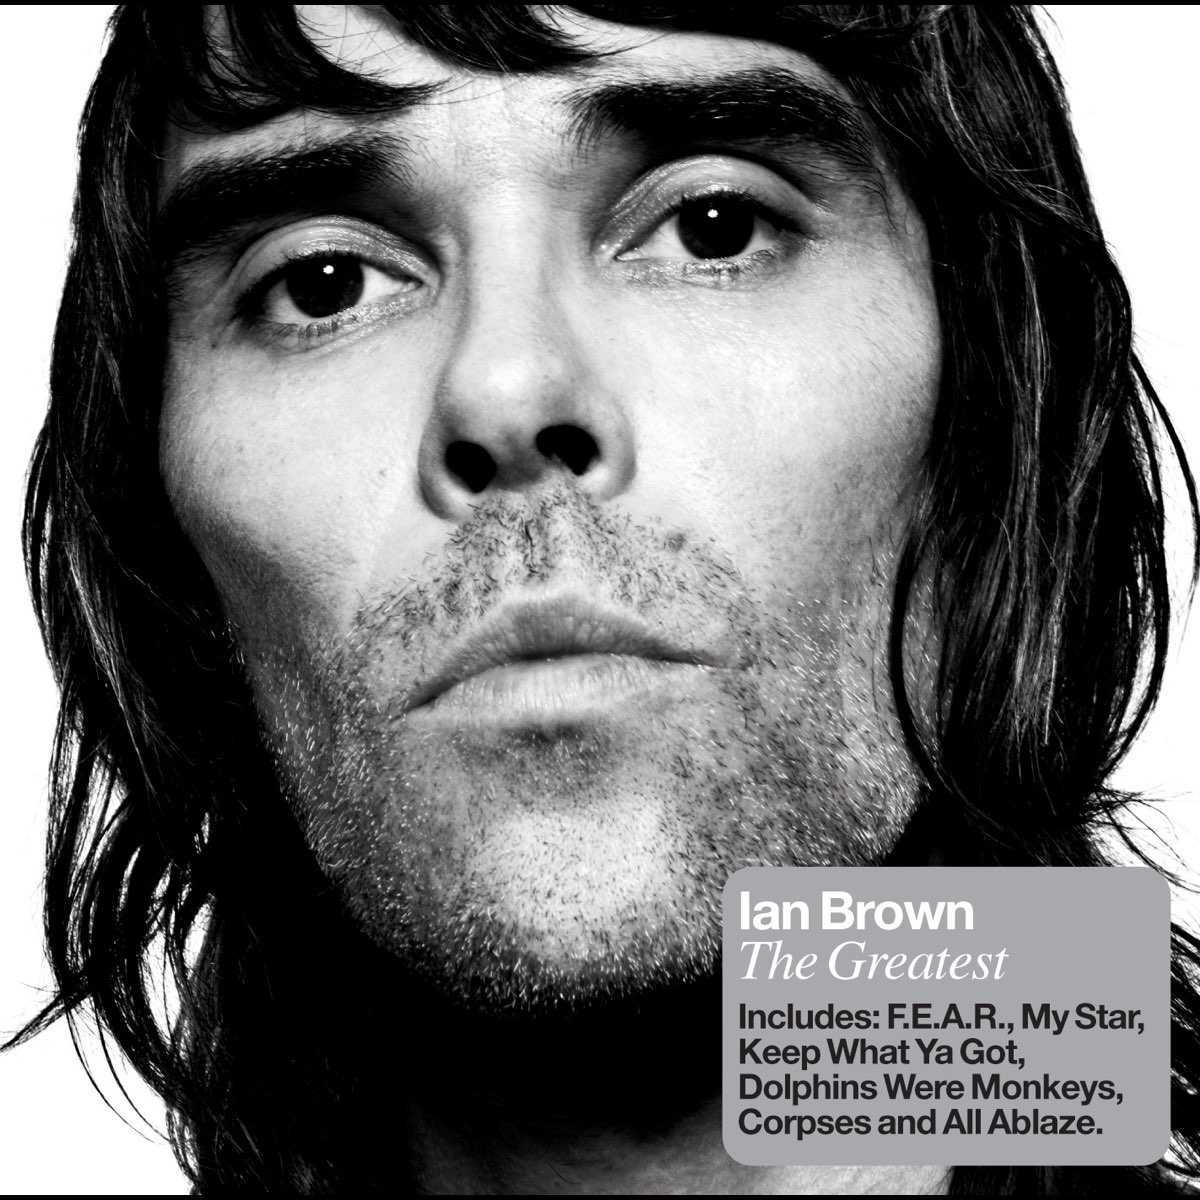 Ian Brown: The Greatest - Album by Ian Brown - Apple Music